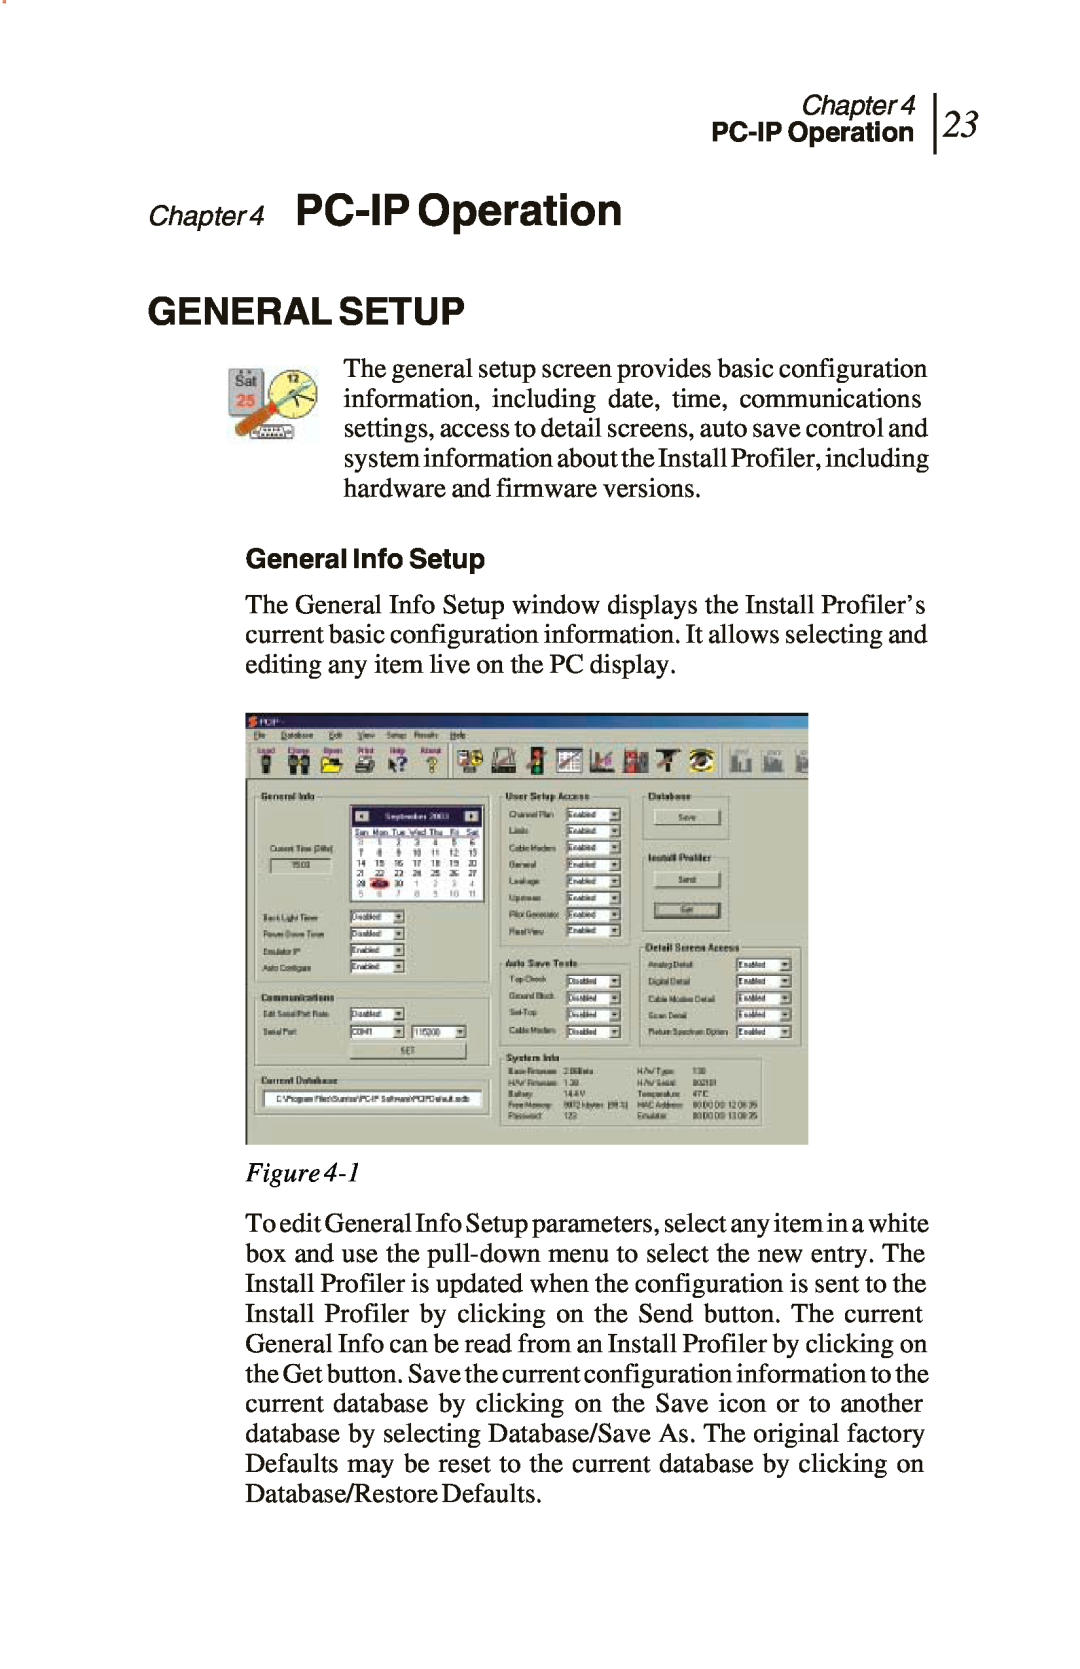 Sunrise Global CM250 IP, CM100 IP, and CM500 IP manual PC-IPOperation, General Setup, General Info Setup, Chapter, Figure 